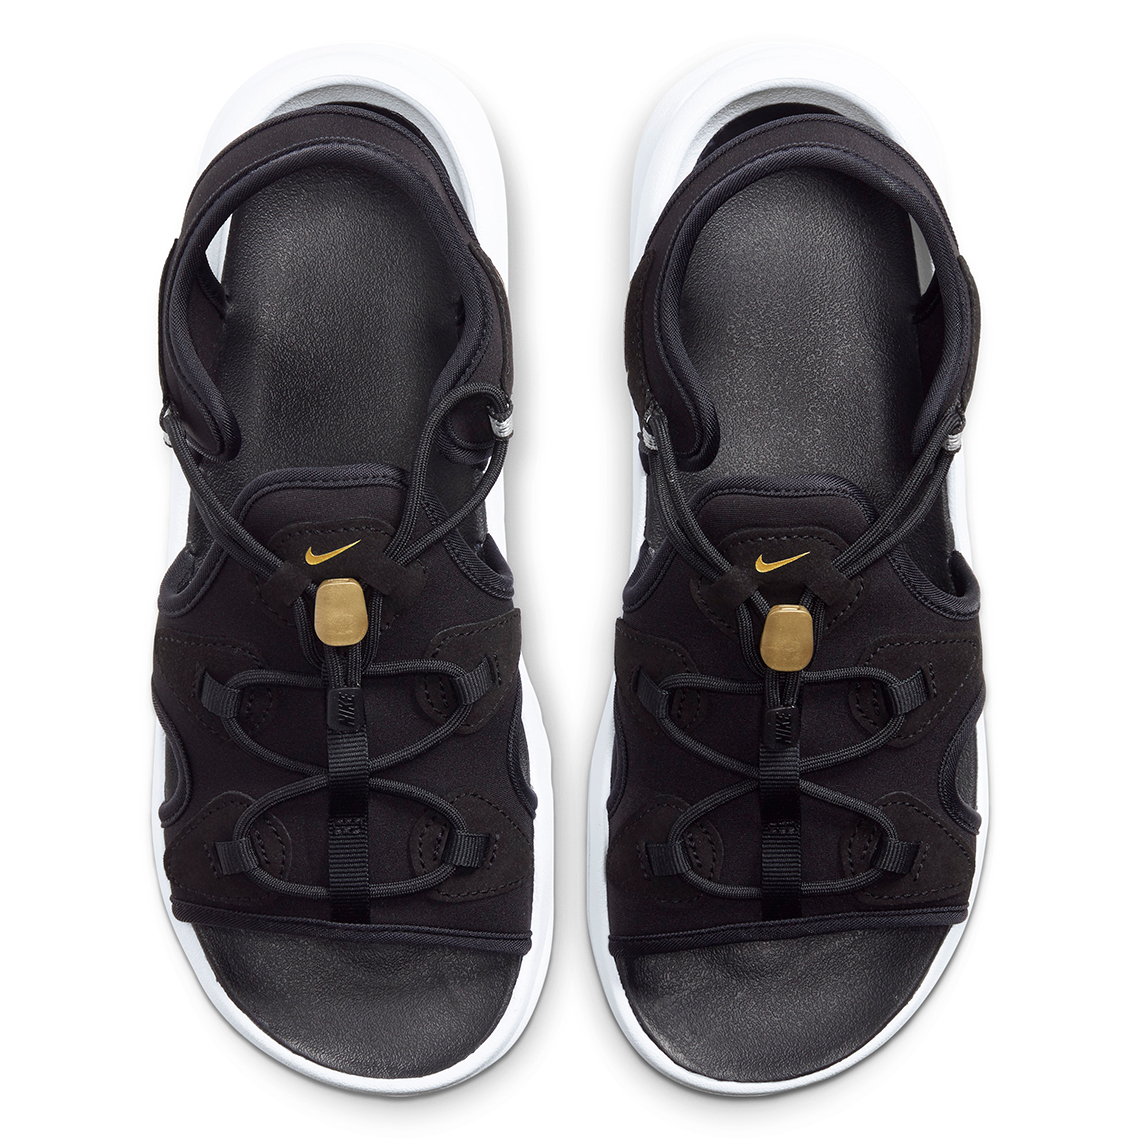 Nike Air Max Koko Sandal Summer 2020 Release Info | SneakerNews.com